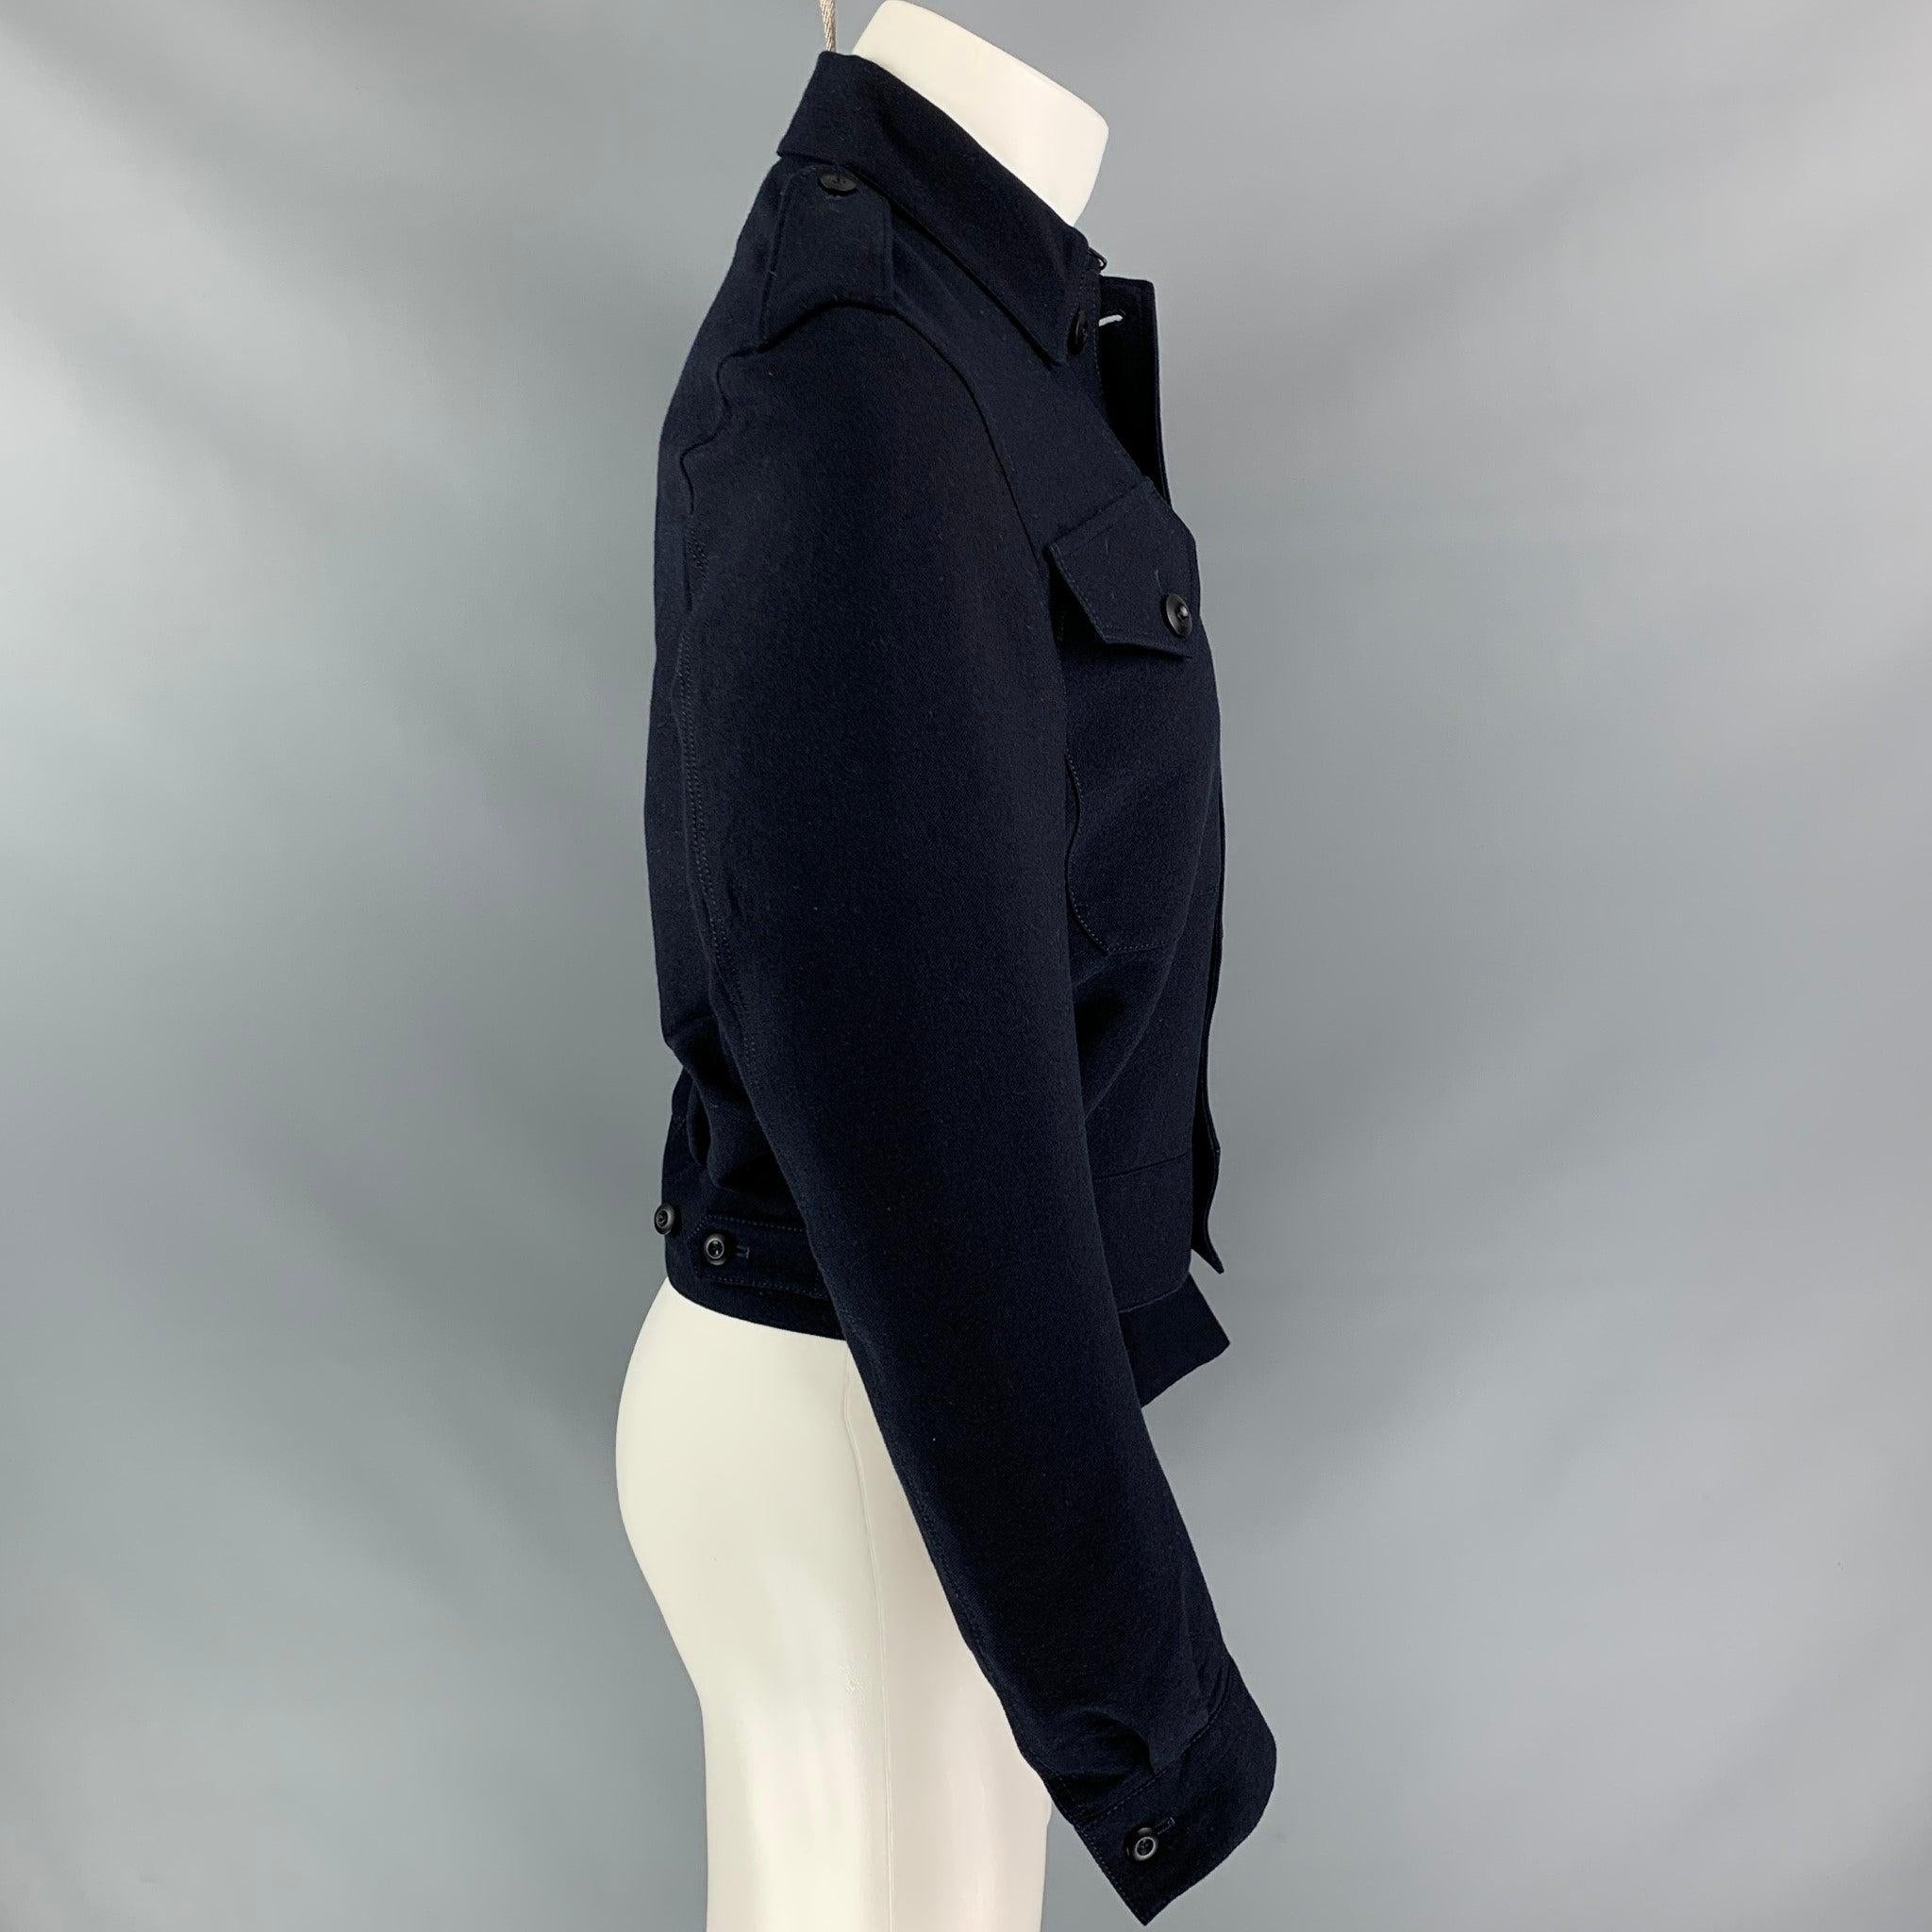 Men's BURBERRY PRORSUM Spring 2015 Size 36 Navy Blue Solid Cashmere Blend Jacket